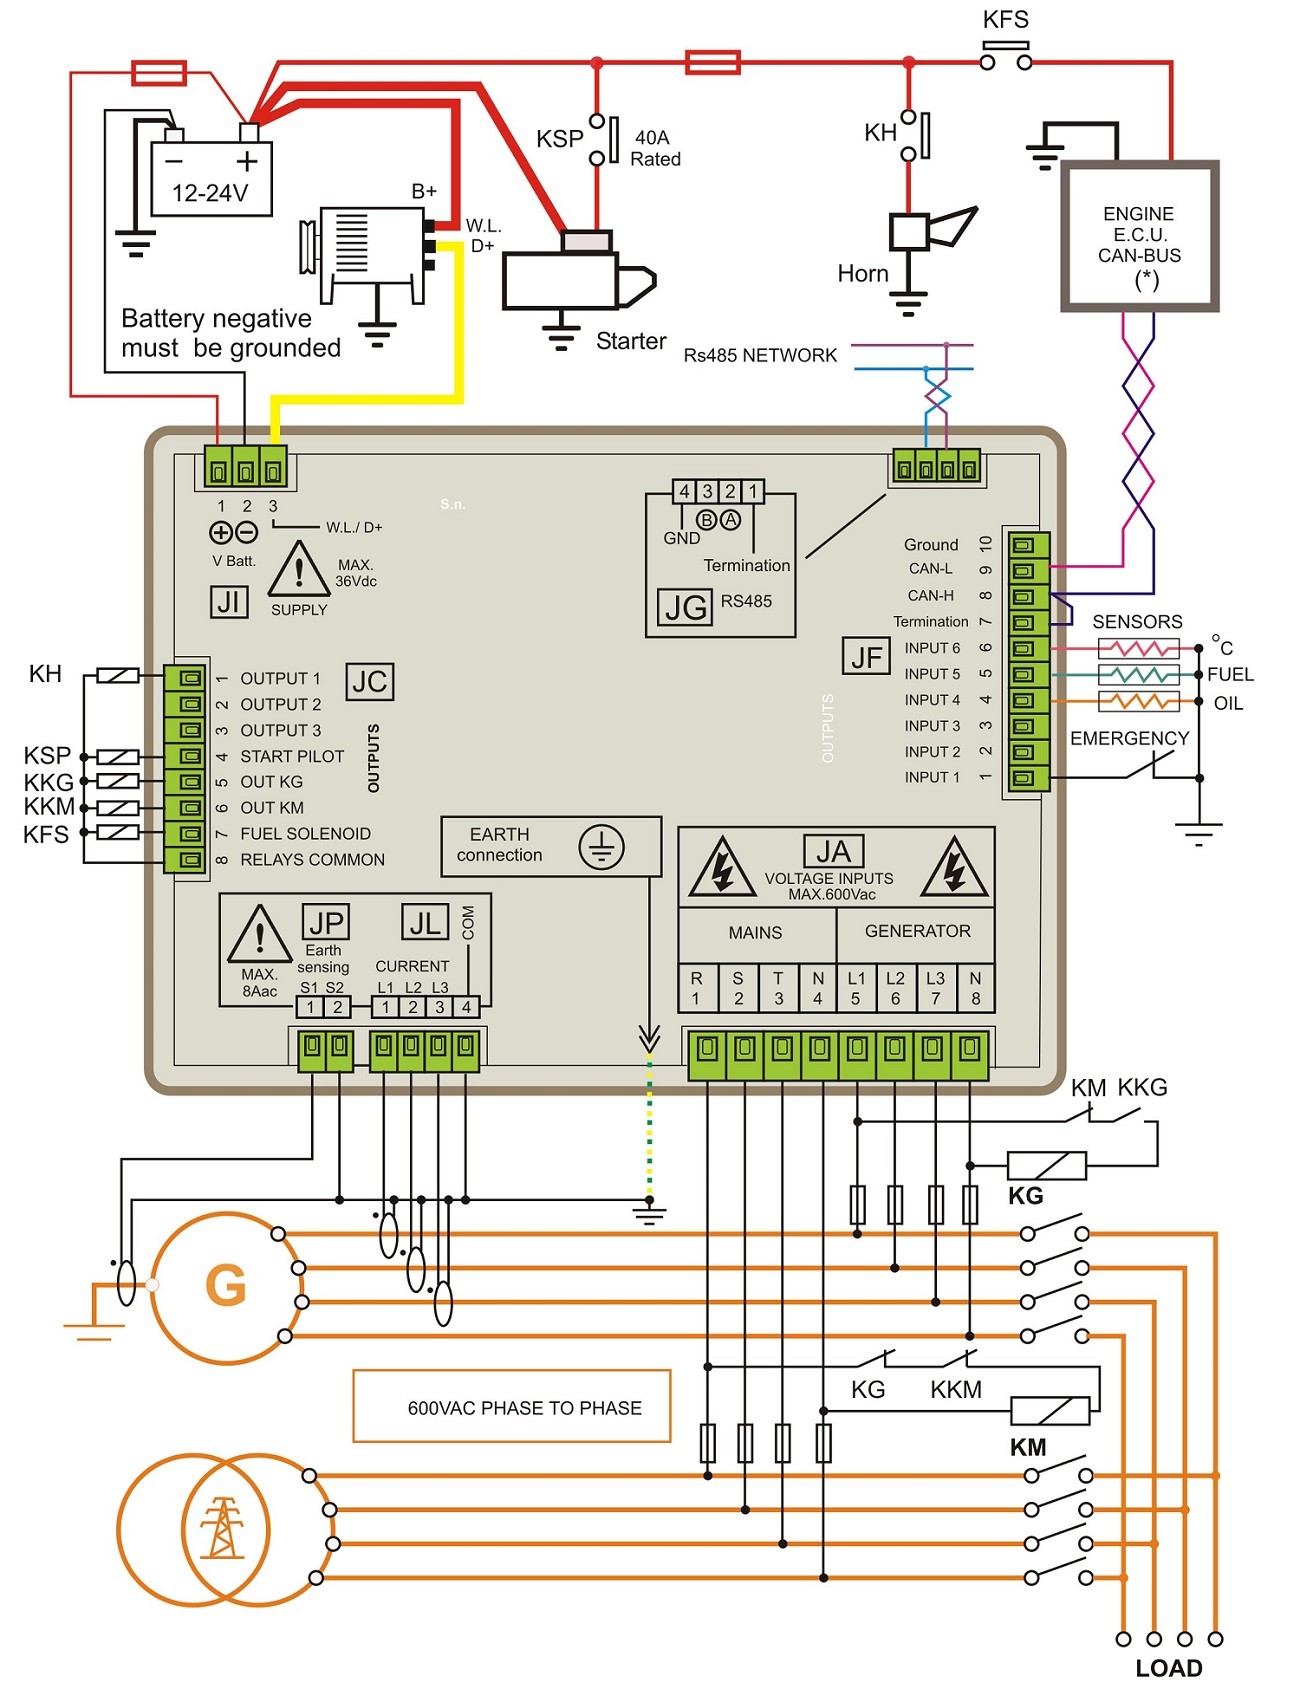 Generator control panel wiring diagram